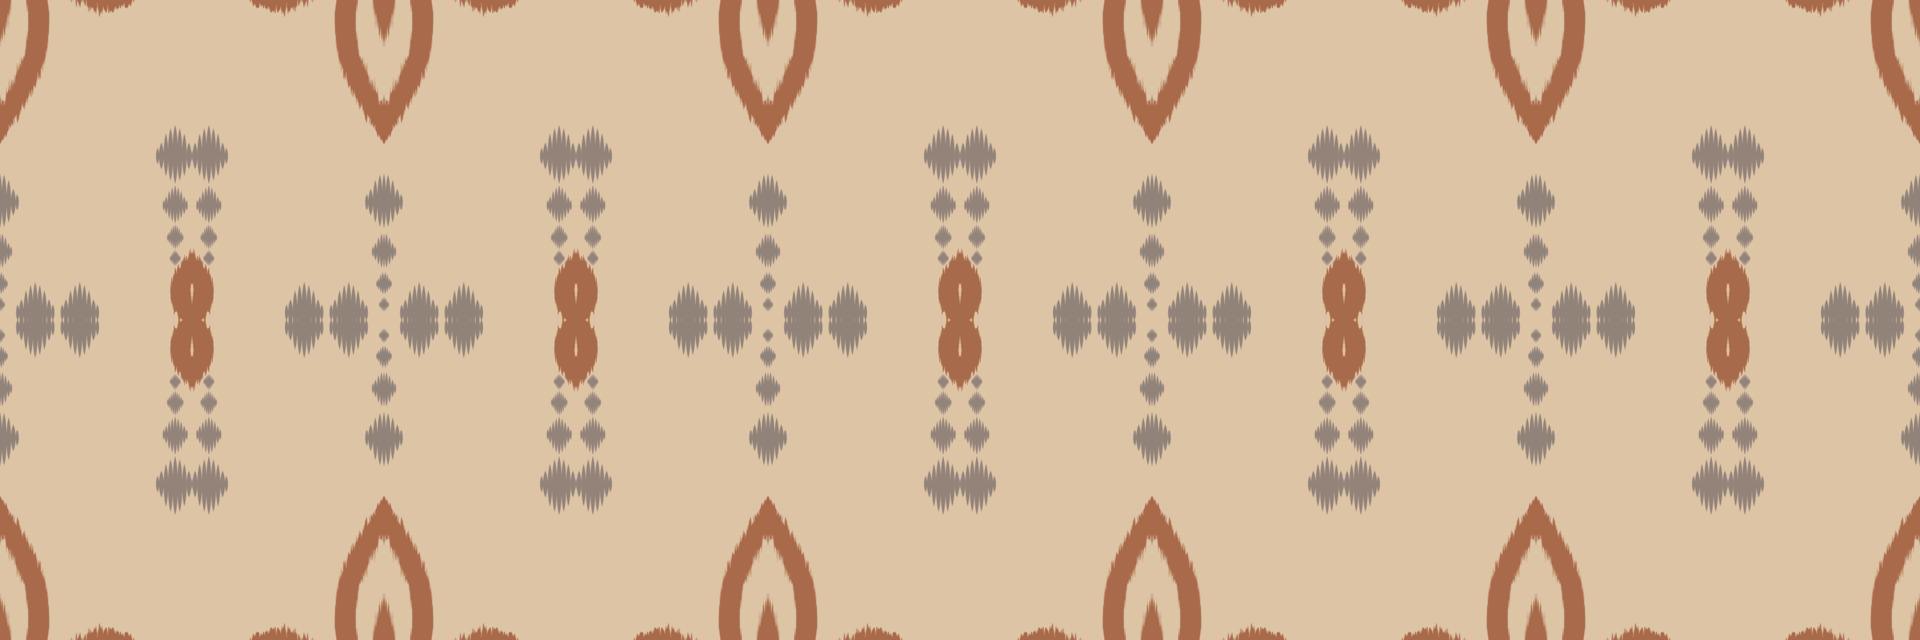 tecido ikat tribal áfrica geométrico design oriental étnico tradicional para o fundo. bordado folclórico, indiano, escandinavo, cigano, mexicano, tapete africano, papel de parede. vetor